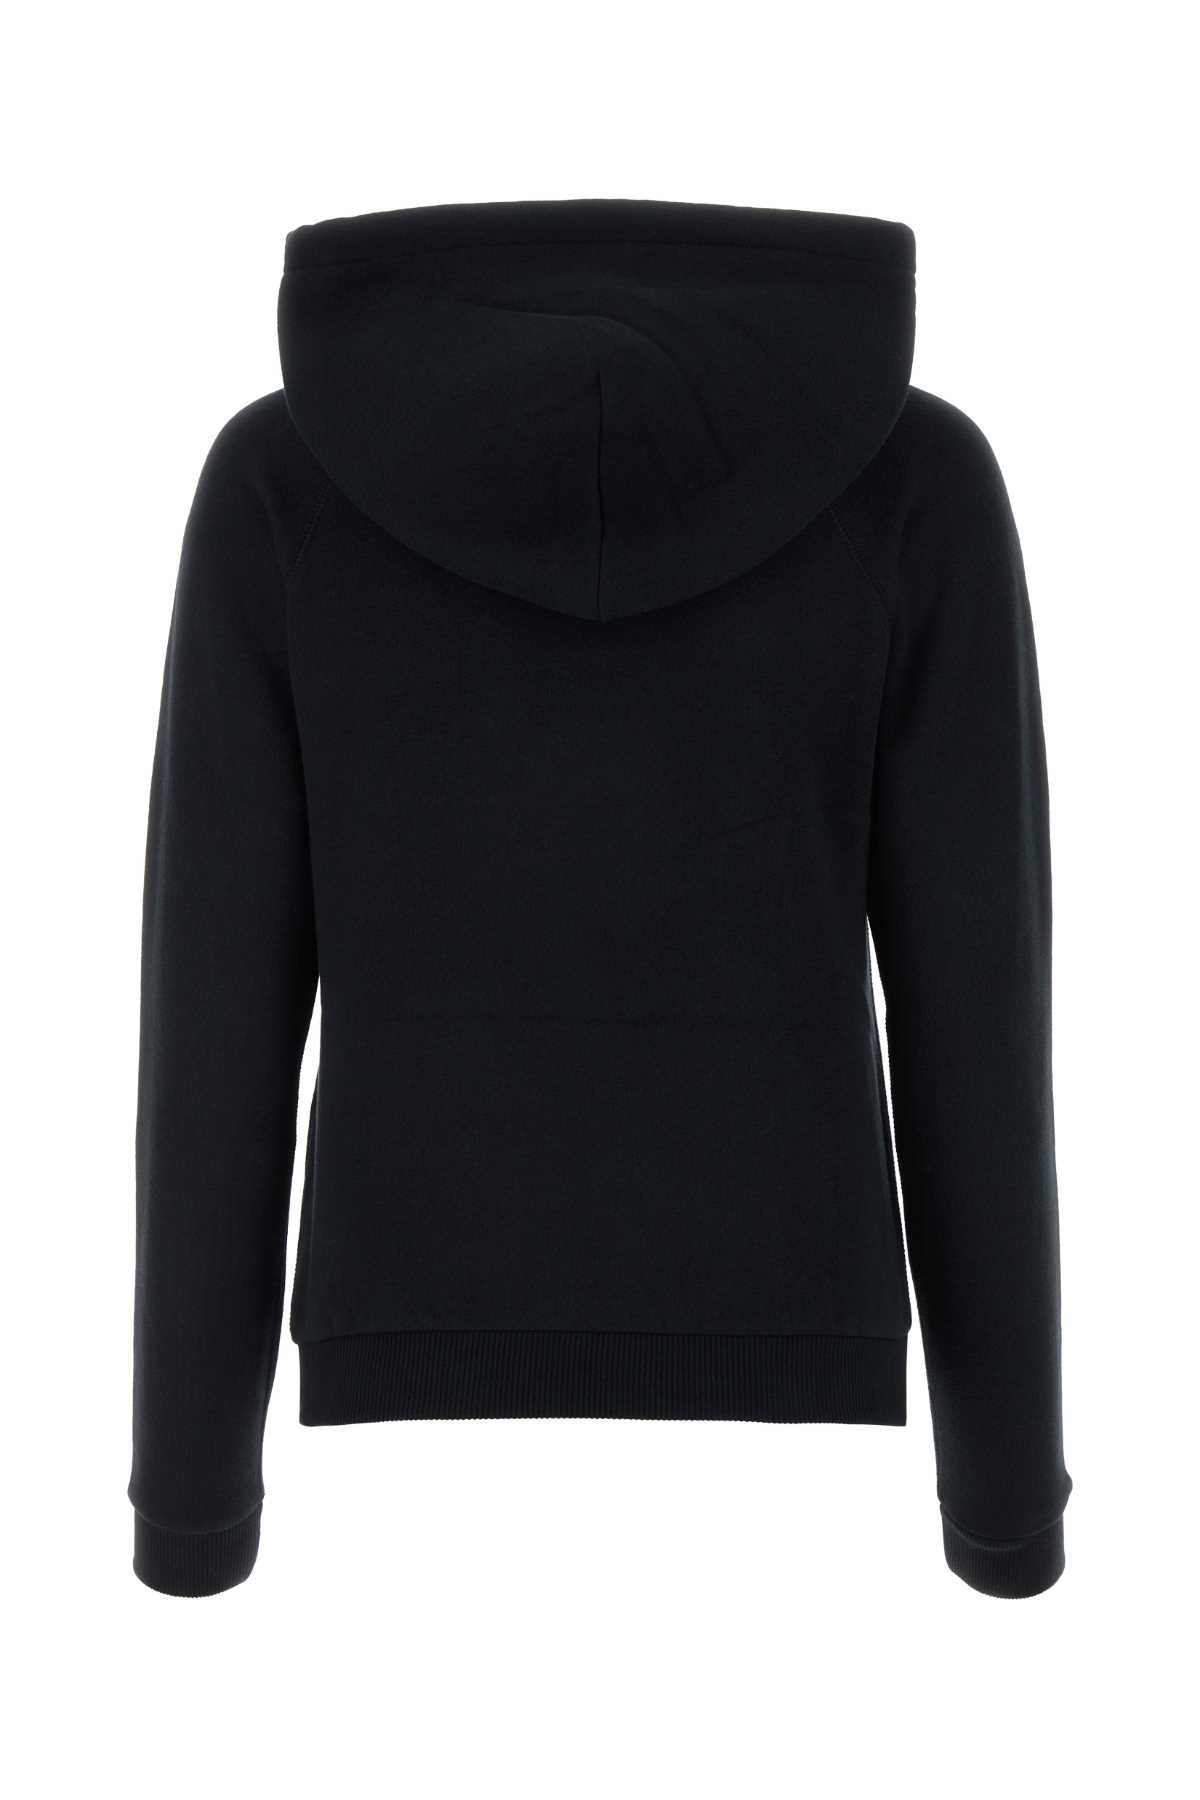 Polo Ralph Lauren Black Cotton Blend Sweatshirt In Poloblack